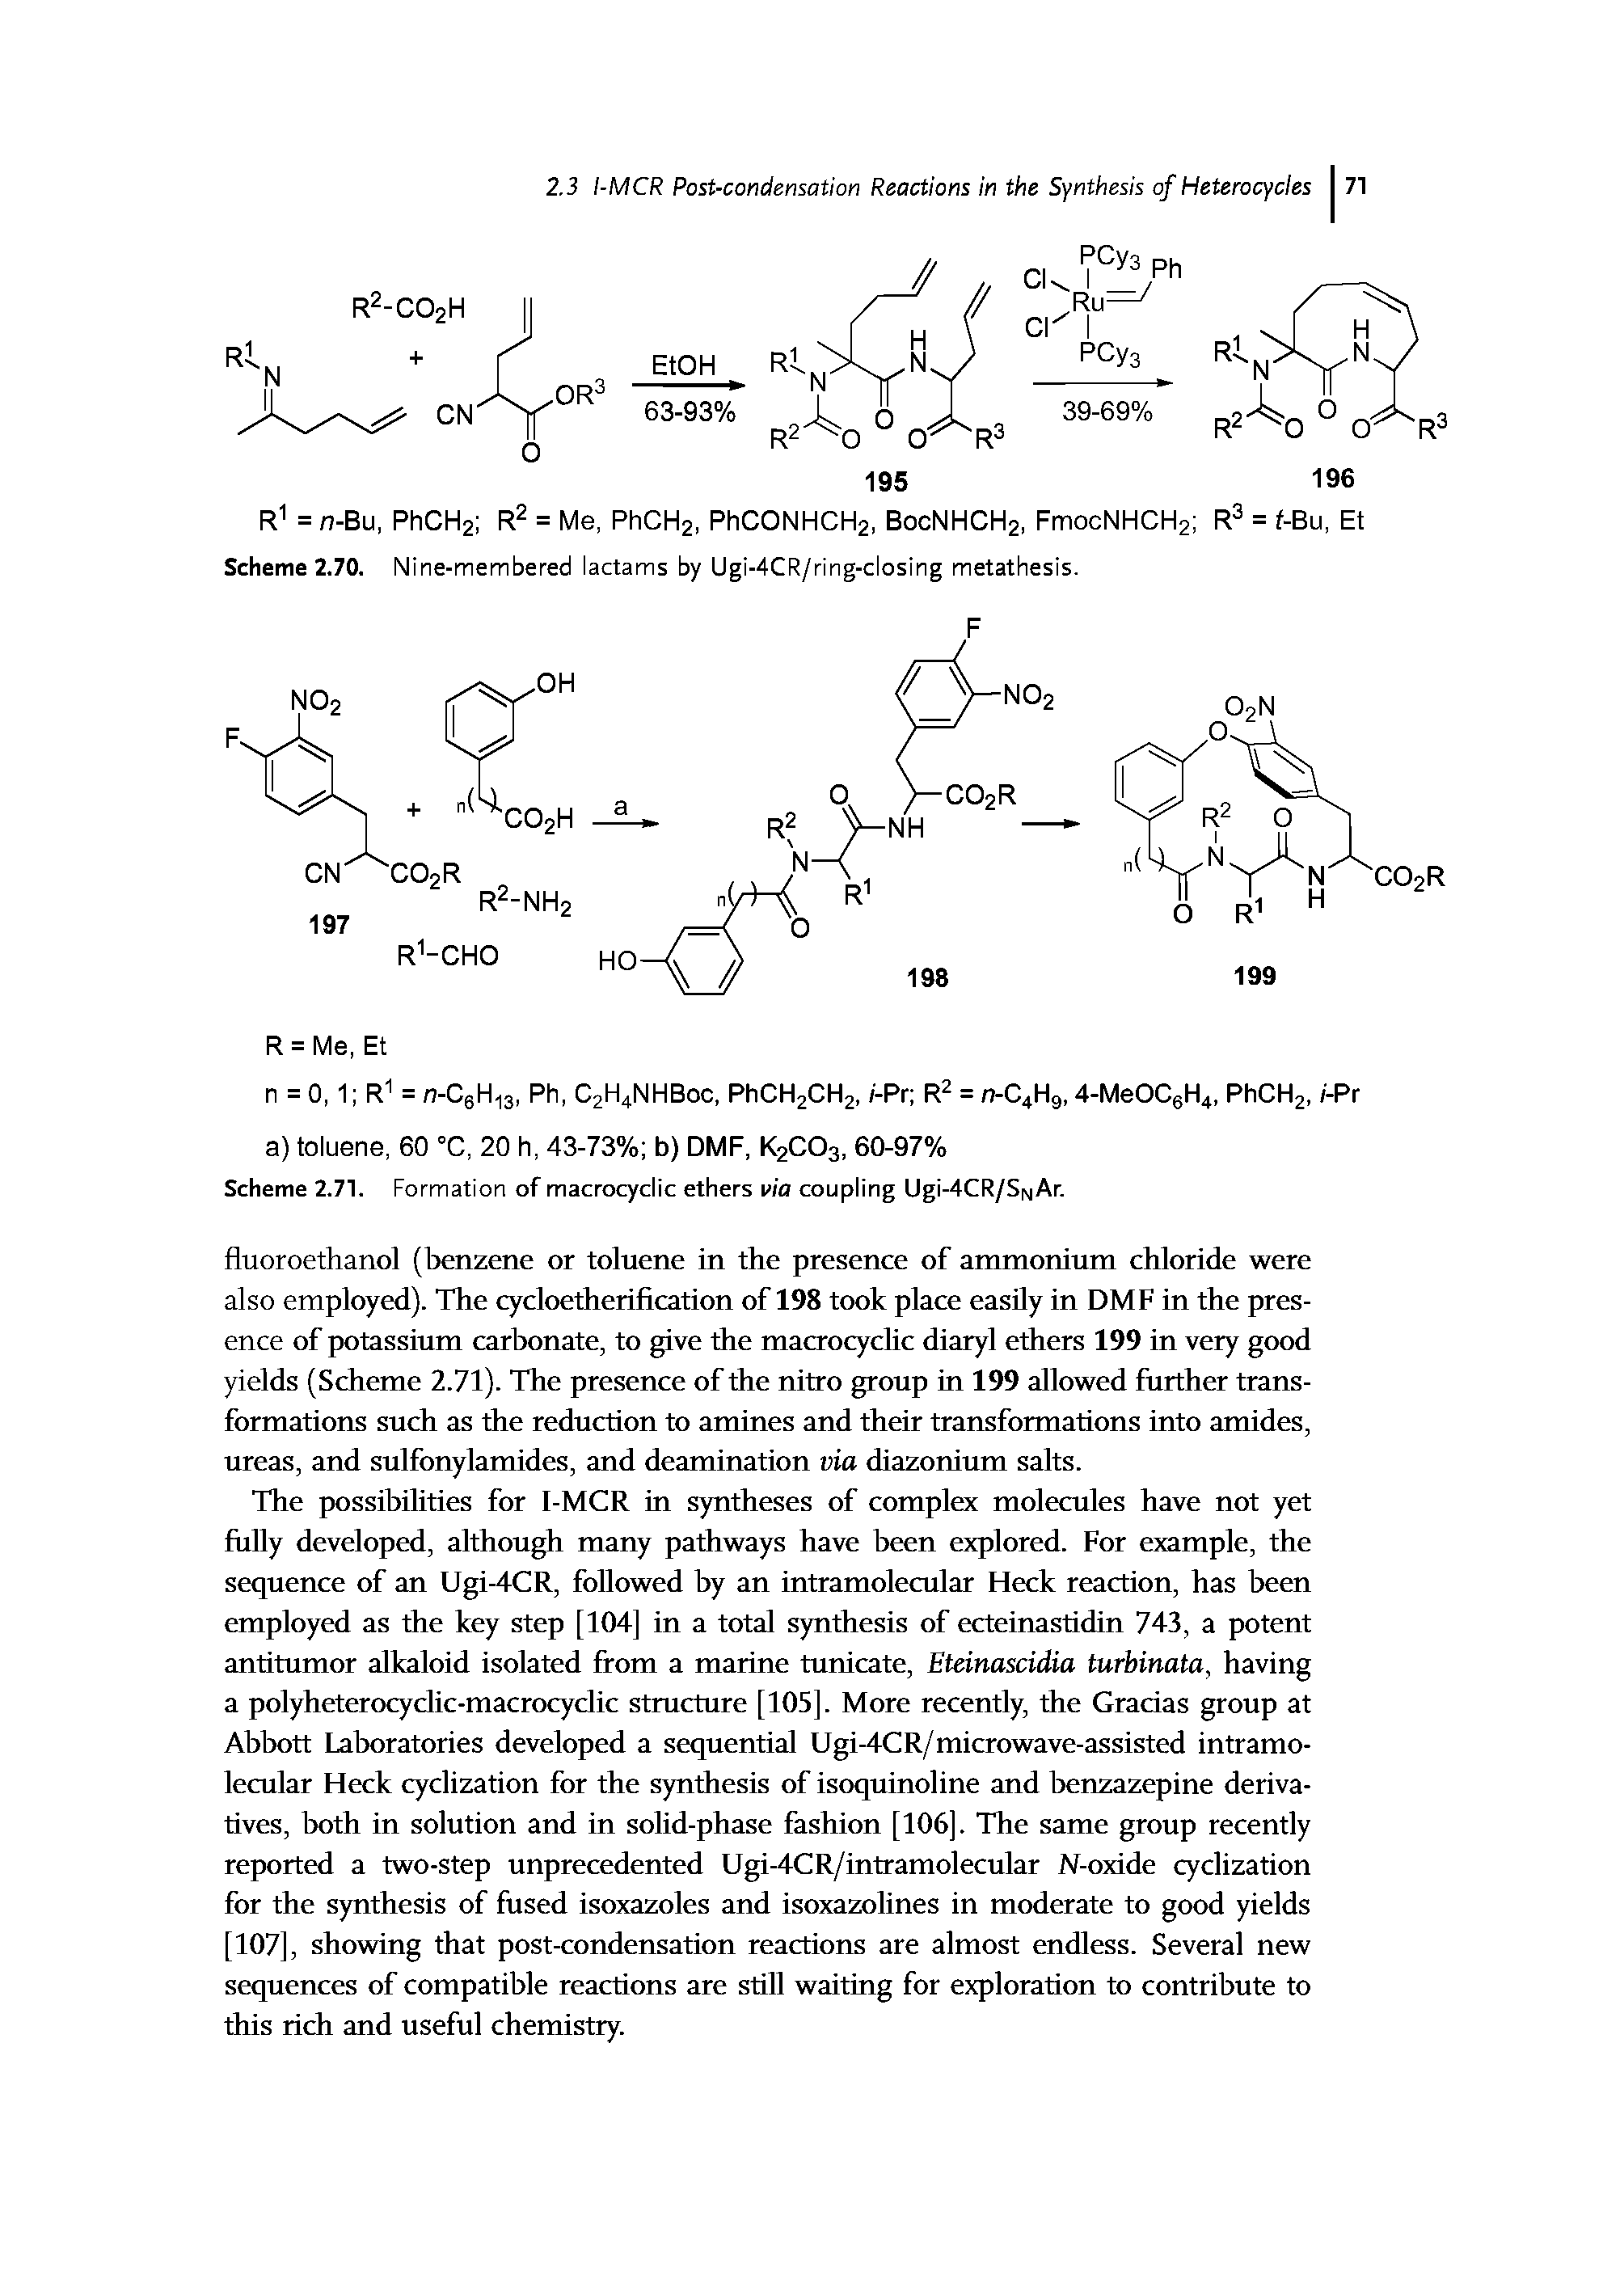 Scheme 2.71. Formation of macrocyclic ethers via coupling Ugi-4CR/SNAr.